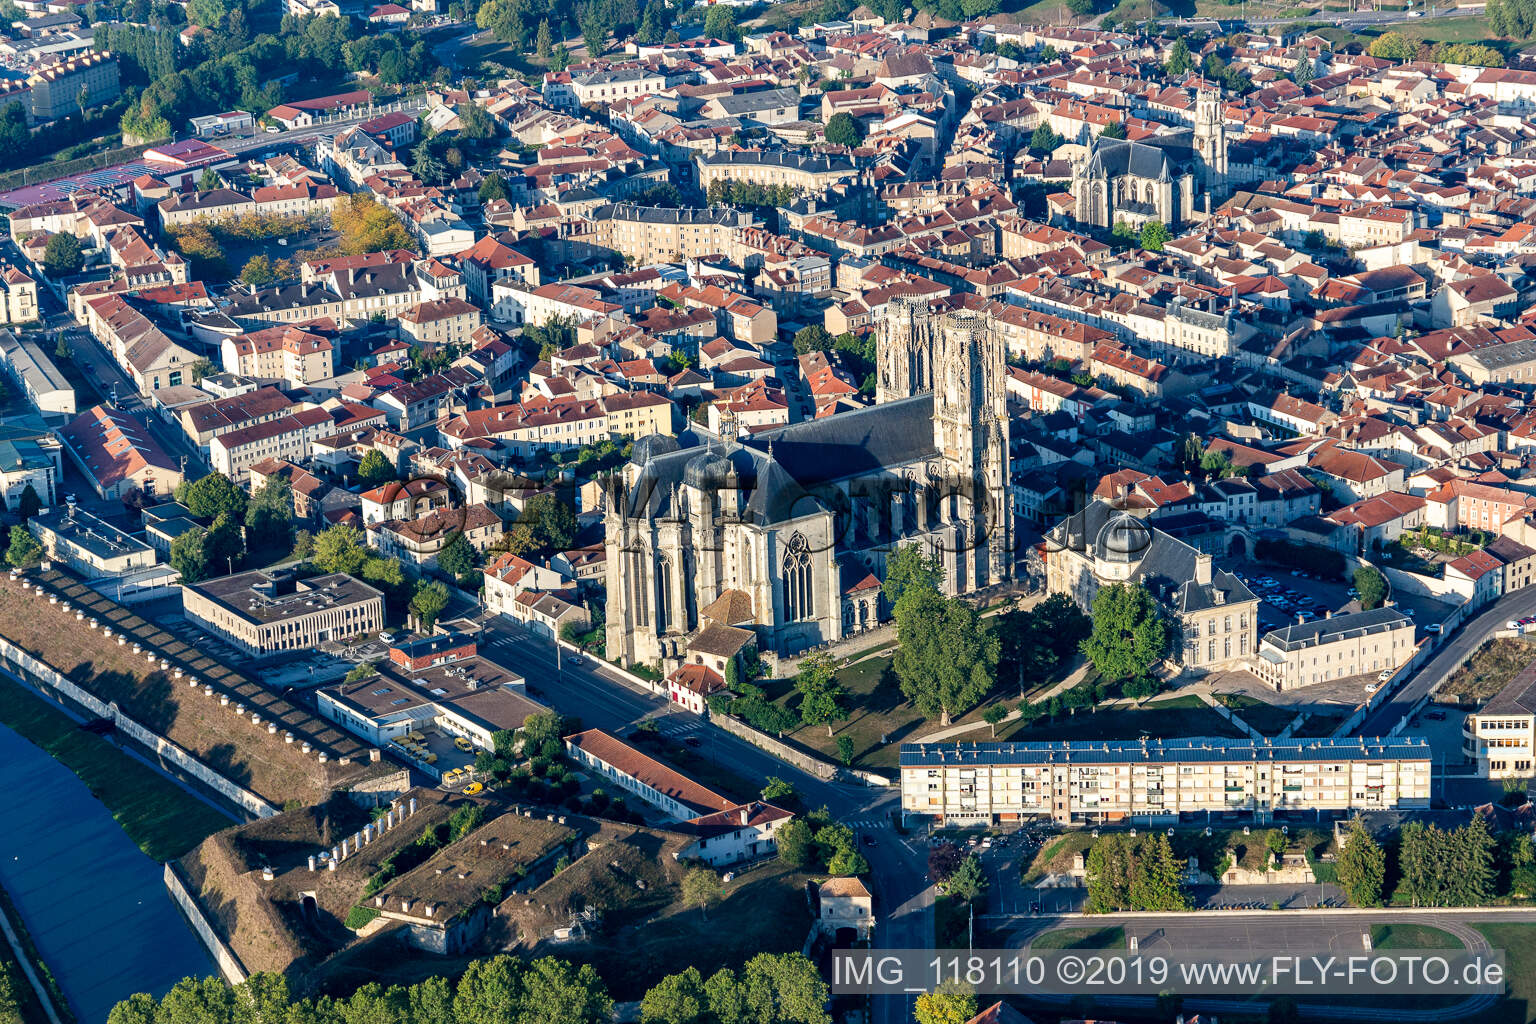 Luftbild von Cathedrale Saint-Etienne de Toul im Bundesland Meurthe-et-Moselle, Frankreich